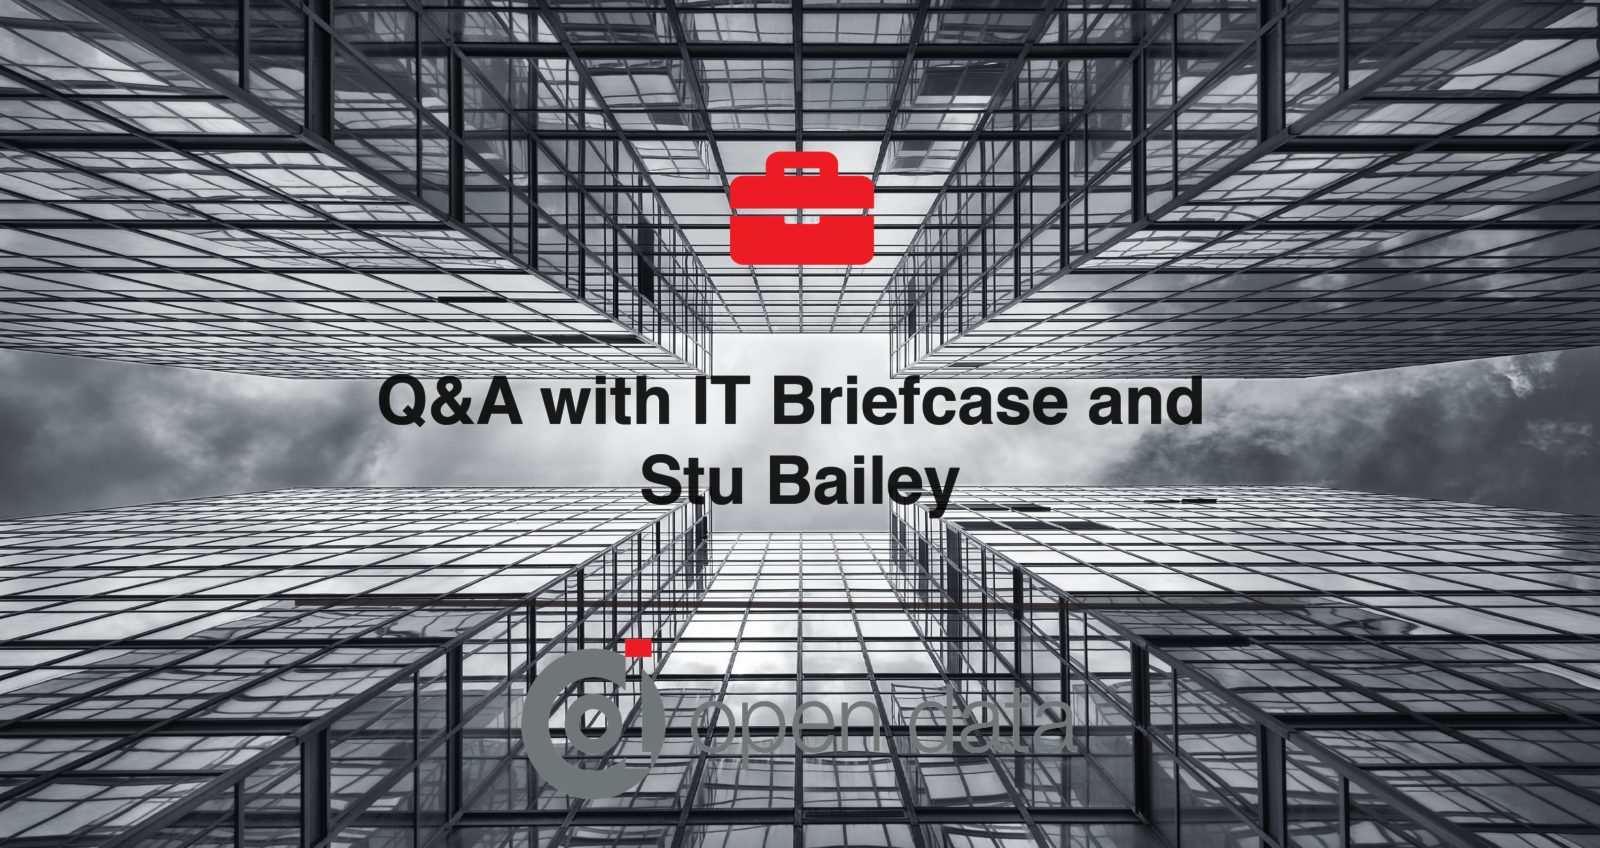 Q&A IT Briefcase